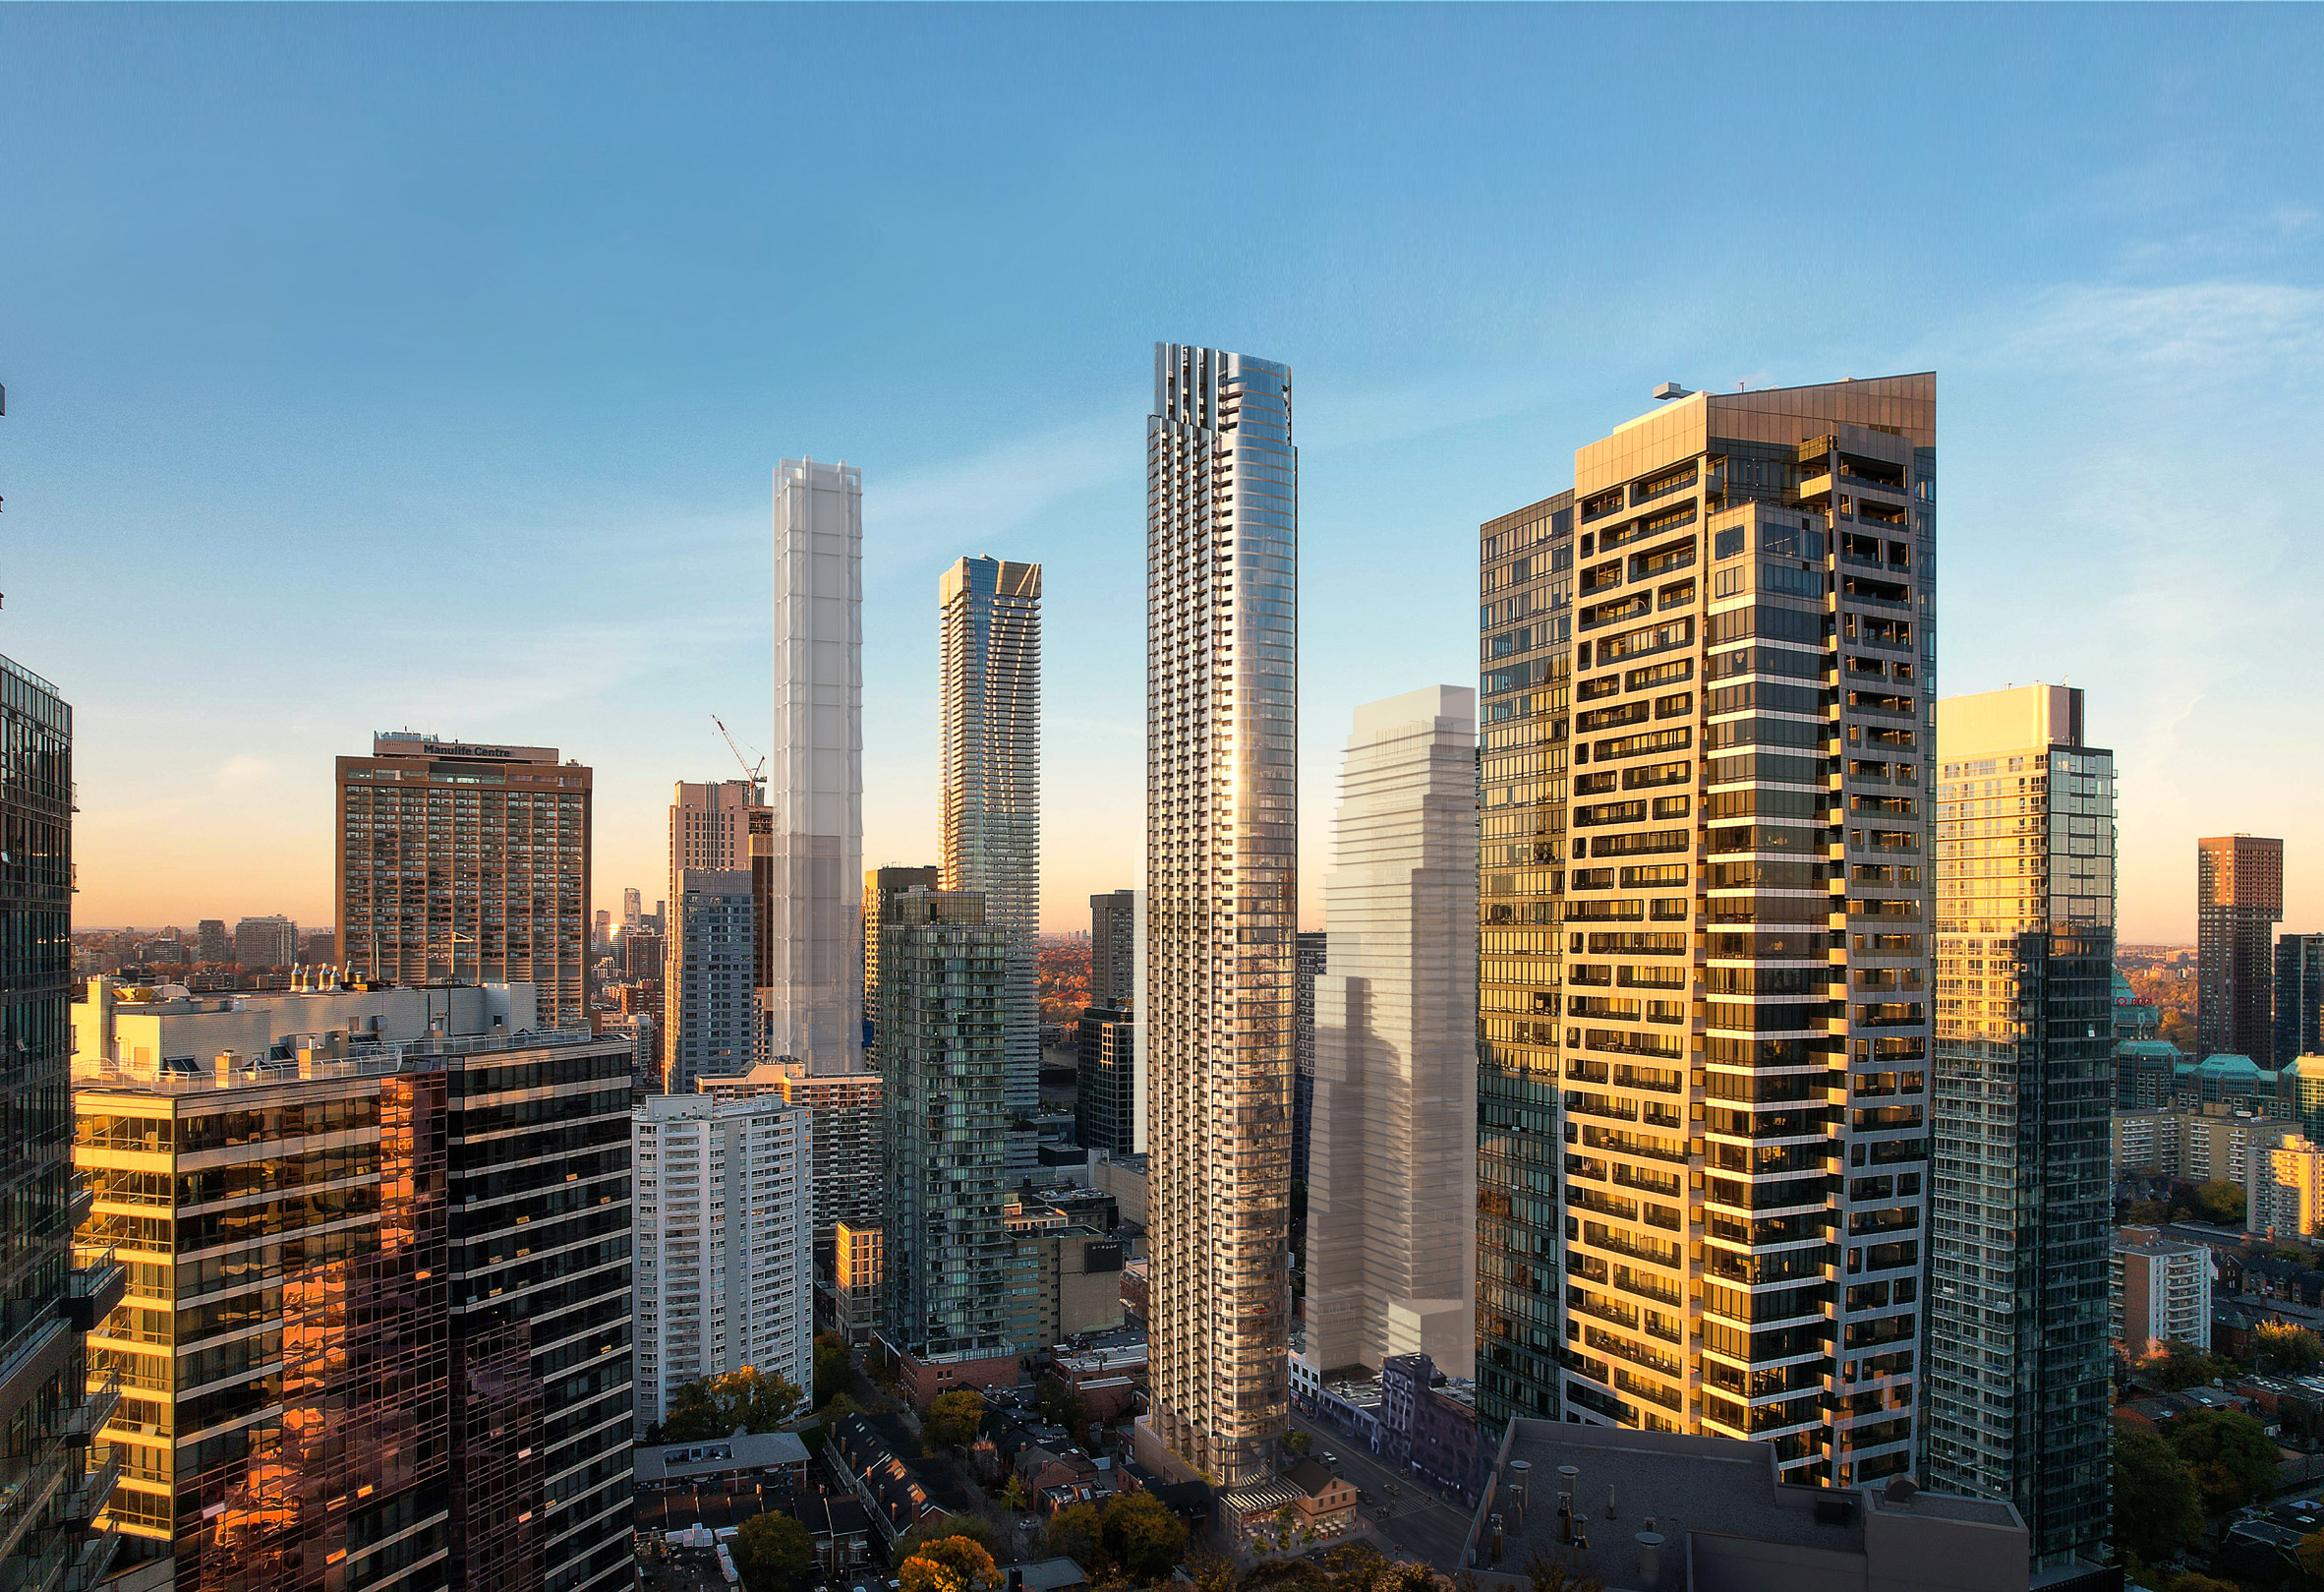 Adrian Smith and Gordon Gill's Toronto Skyscrapers